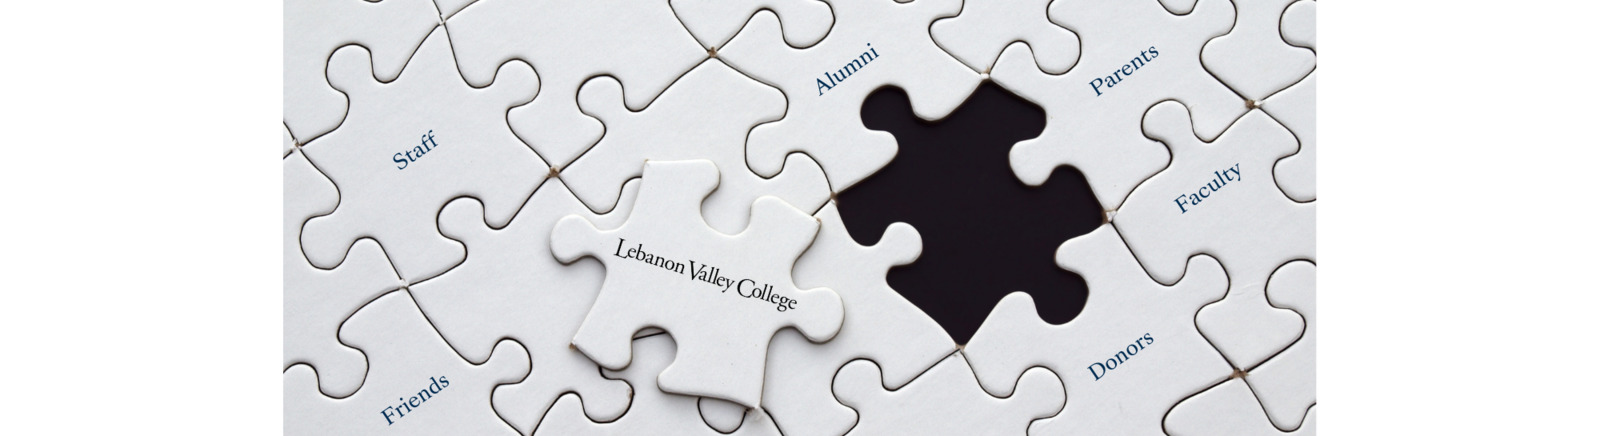 Lebanon Valley College puzzle pieces